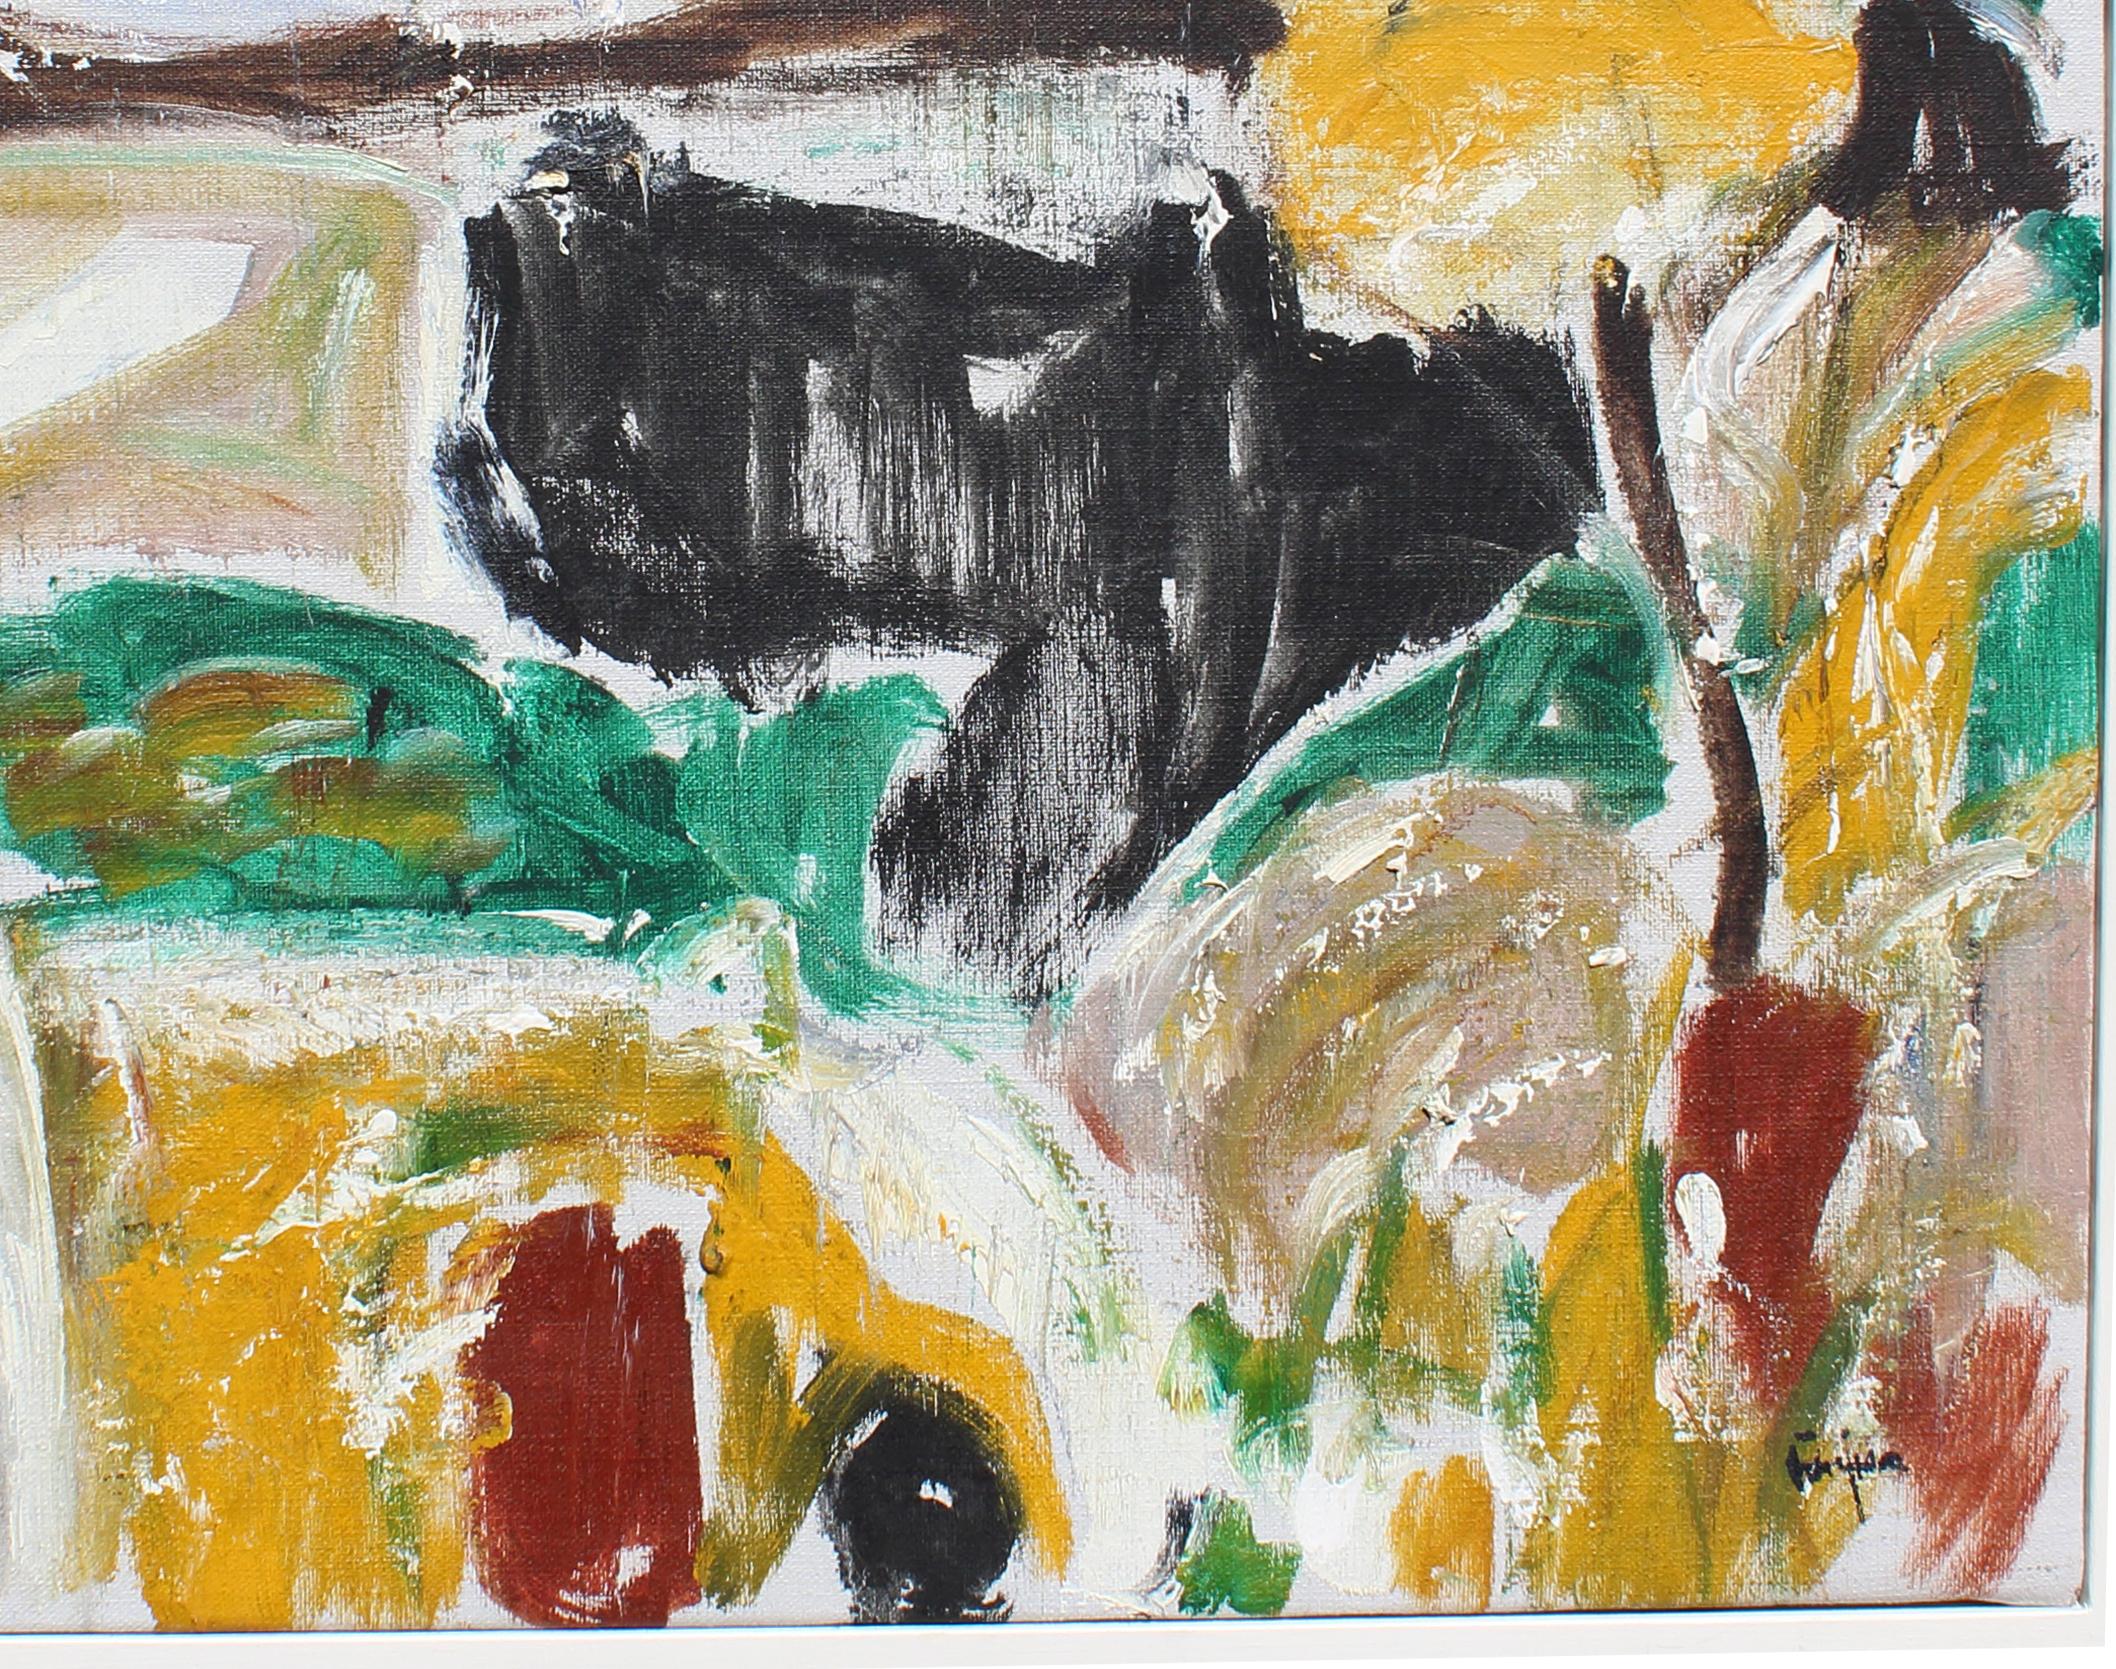 Paysage, Woodstock, New York - Expressionnisme abstrait Painting par Arthur Pinajian